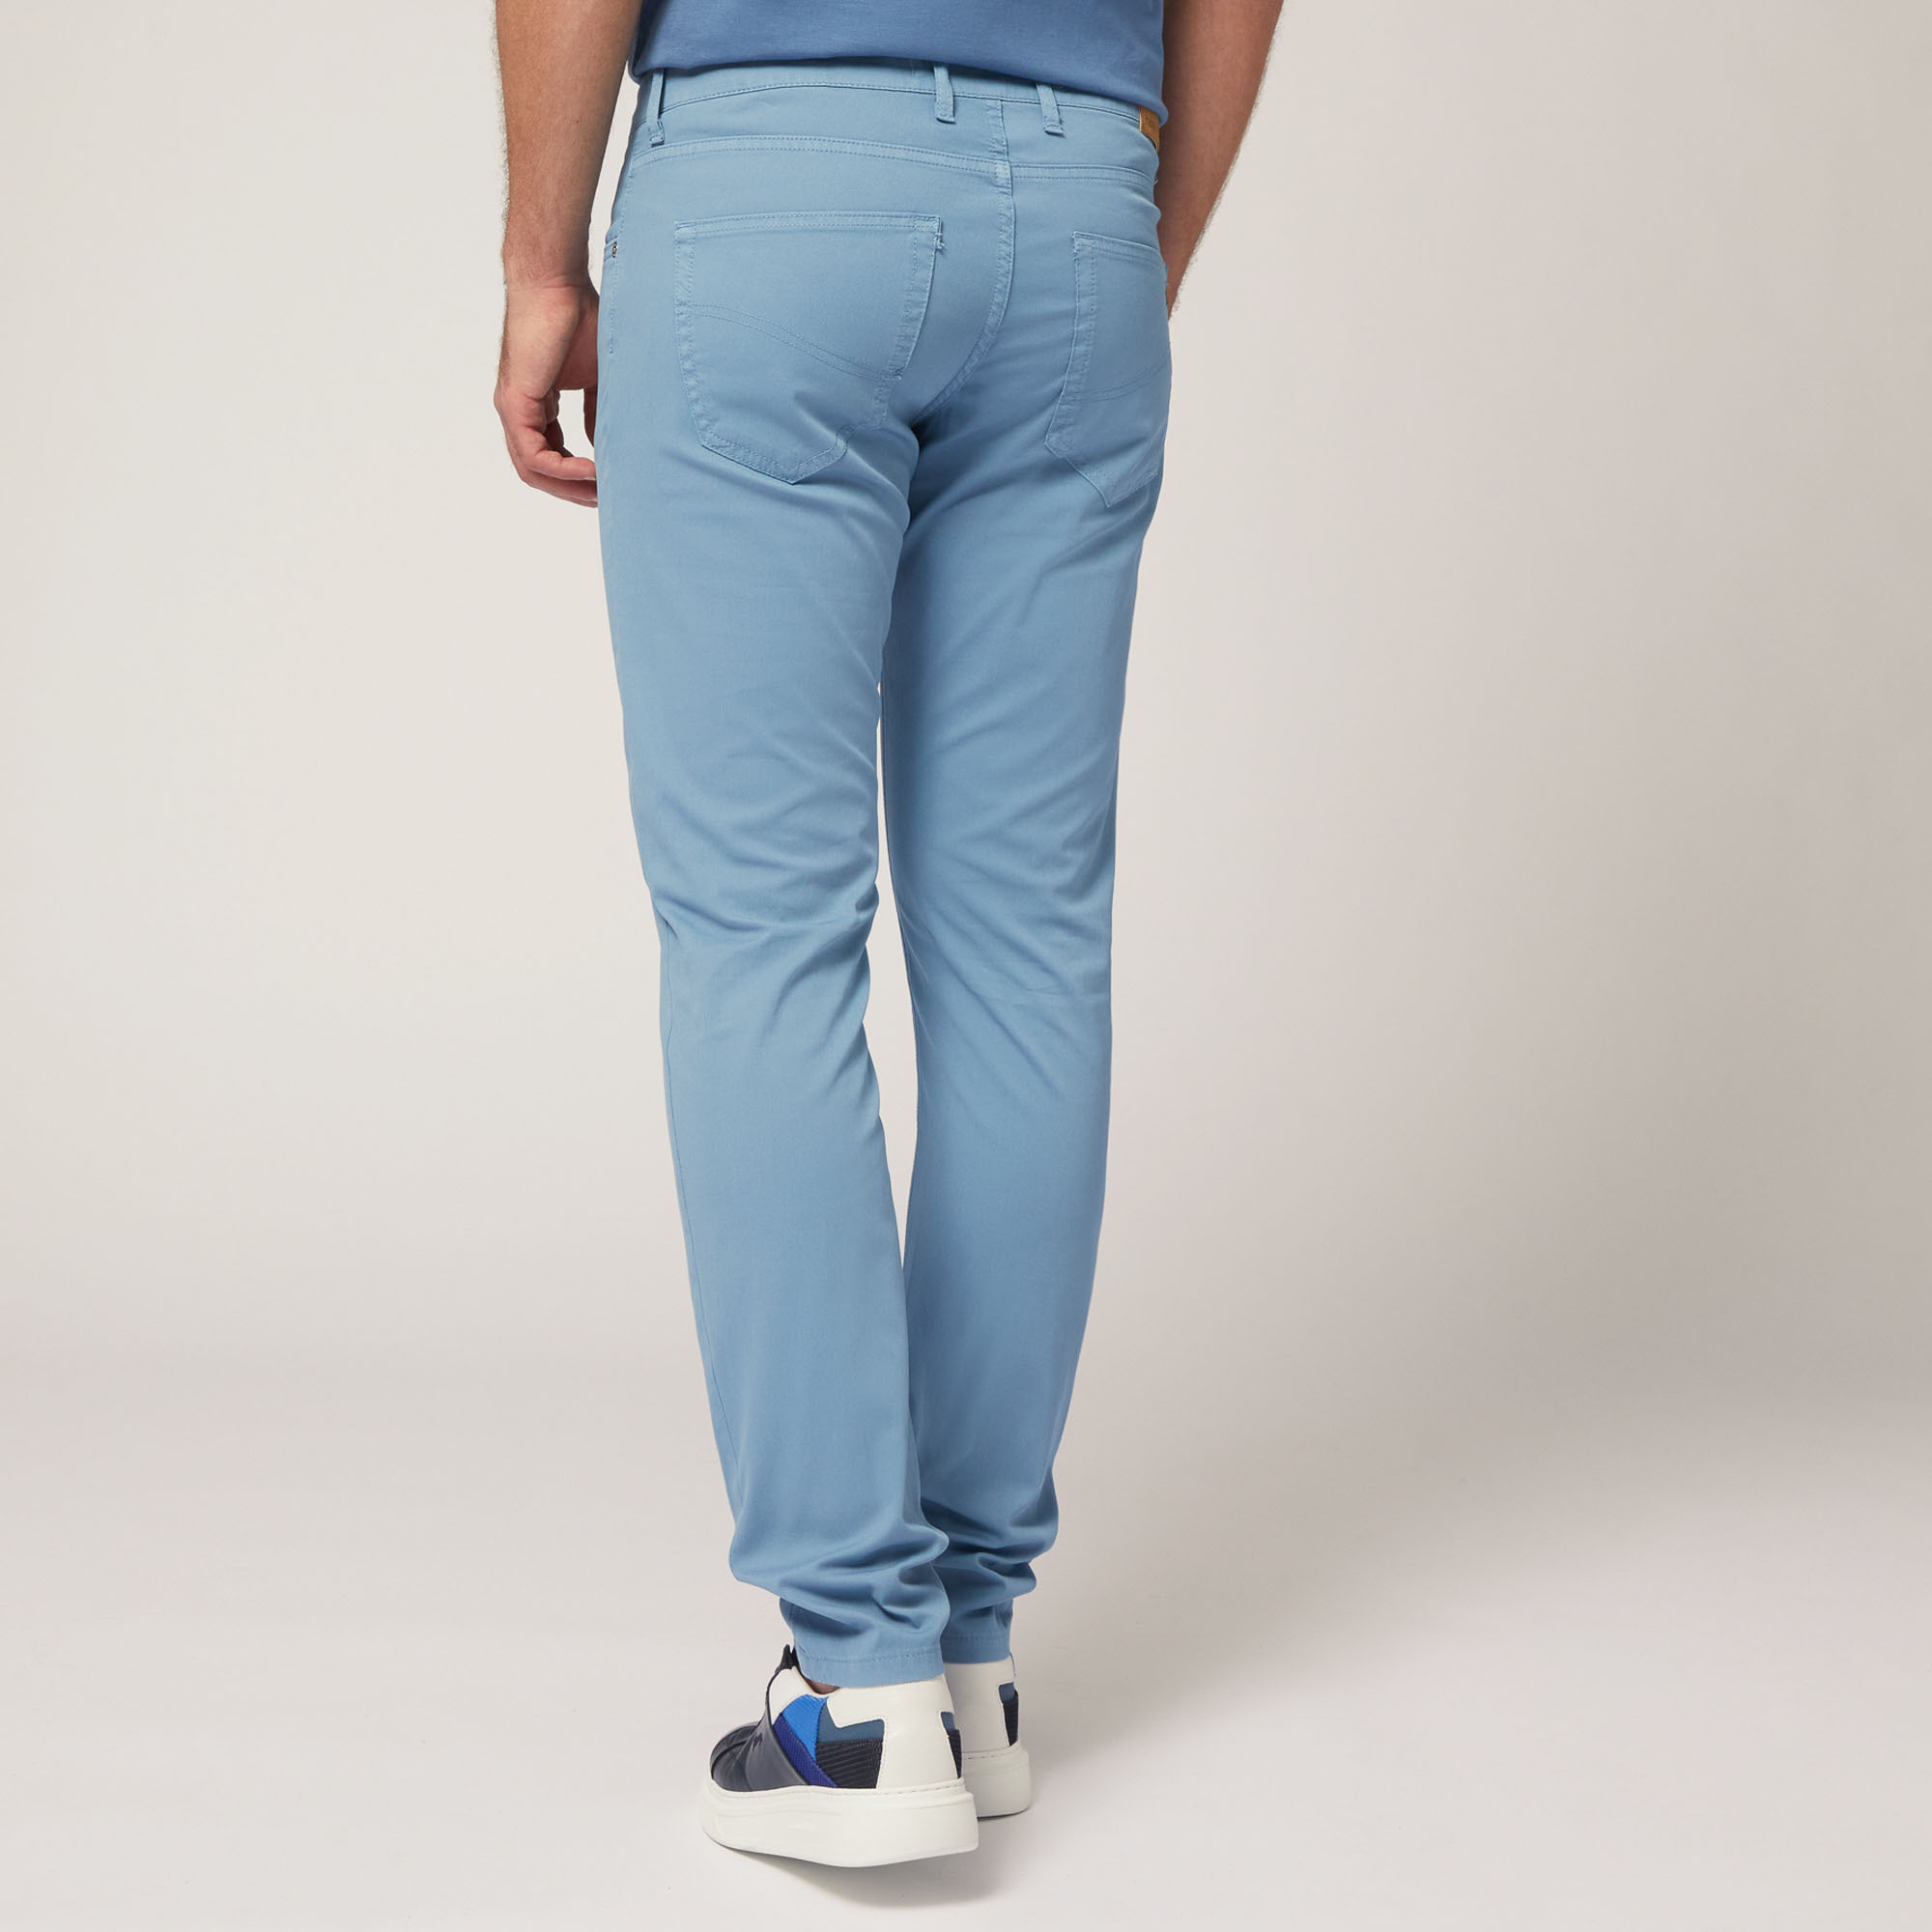 Pantalón de cinco bolsillos ajustado, Azul, large image number 1